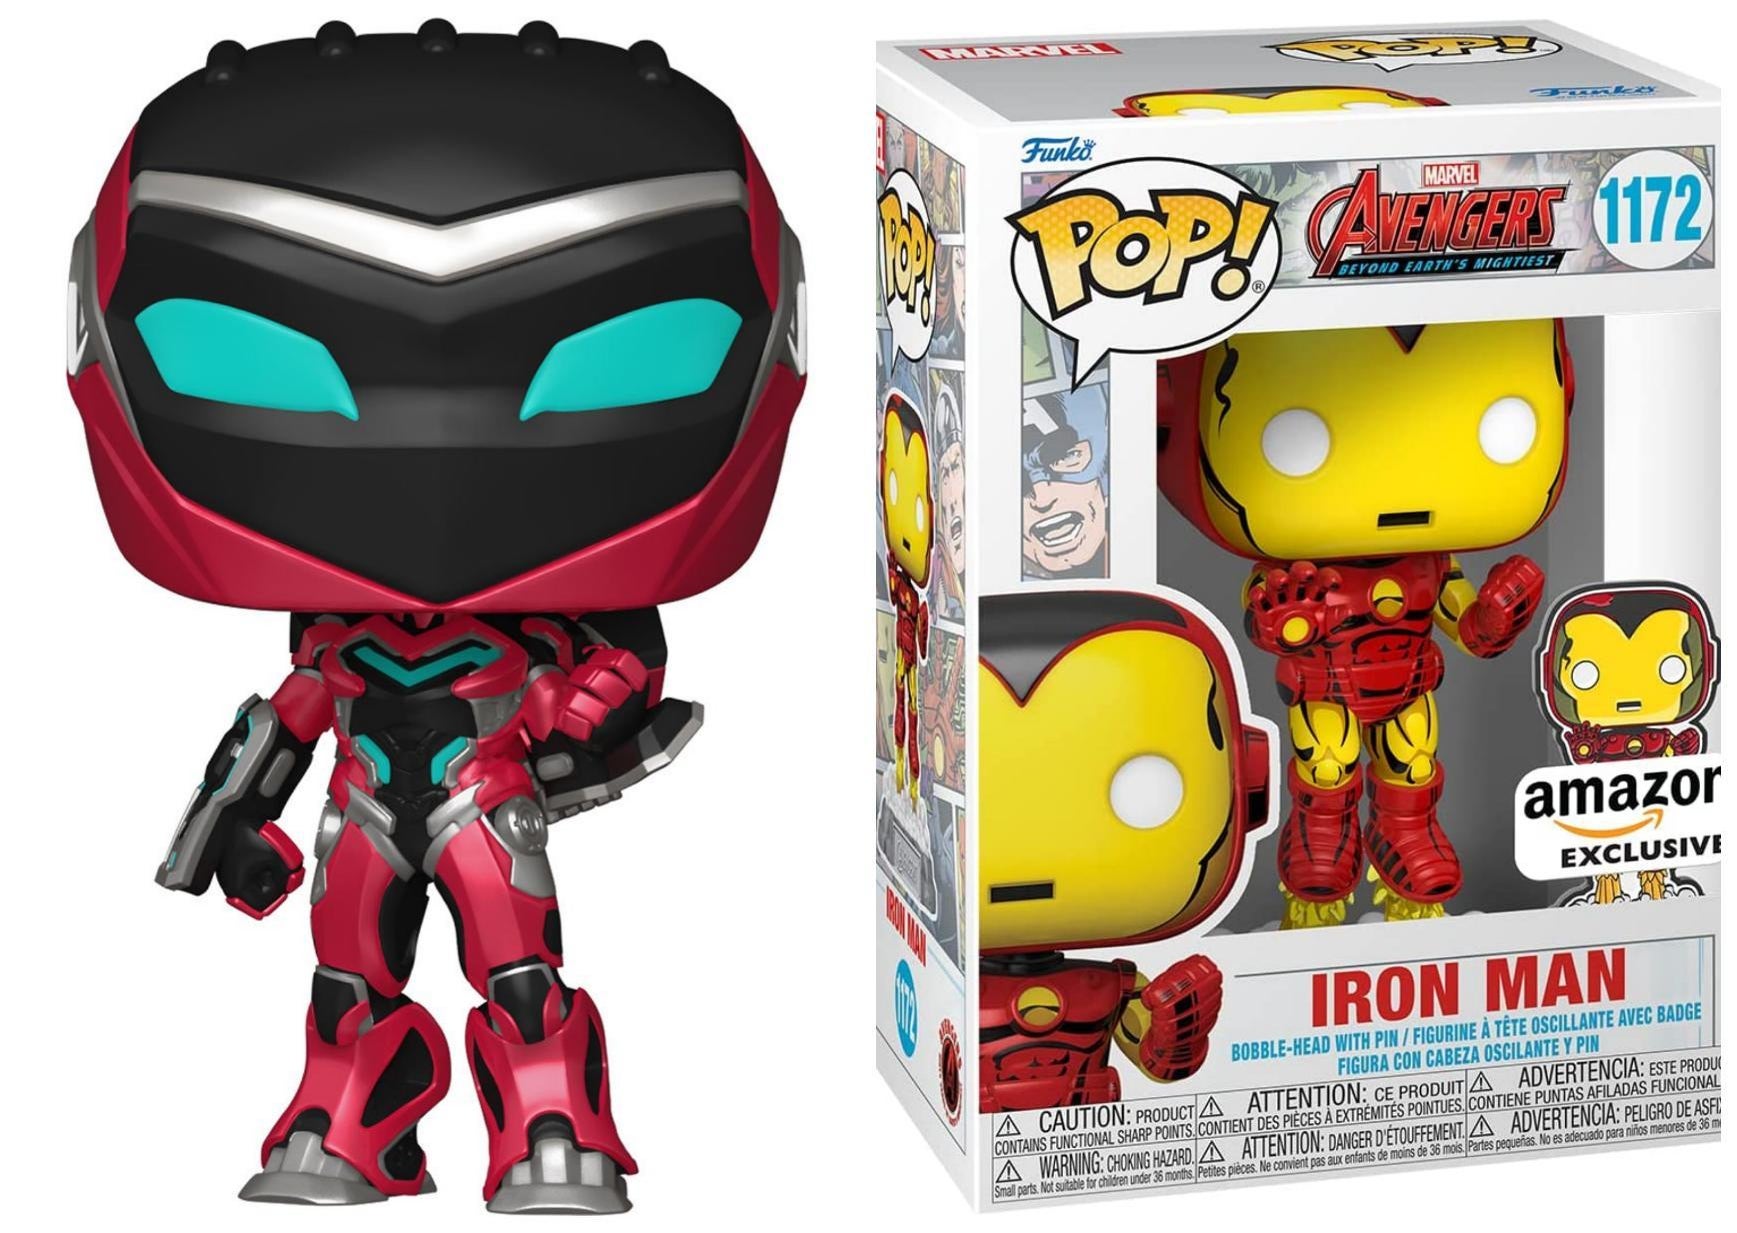 Iron Man Funko Pop and Pin Set Drops Alongside New Black Panther: Wakanda Forever Ironheart